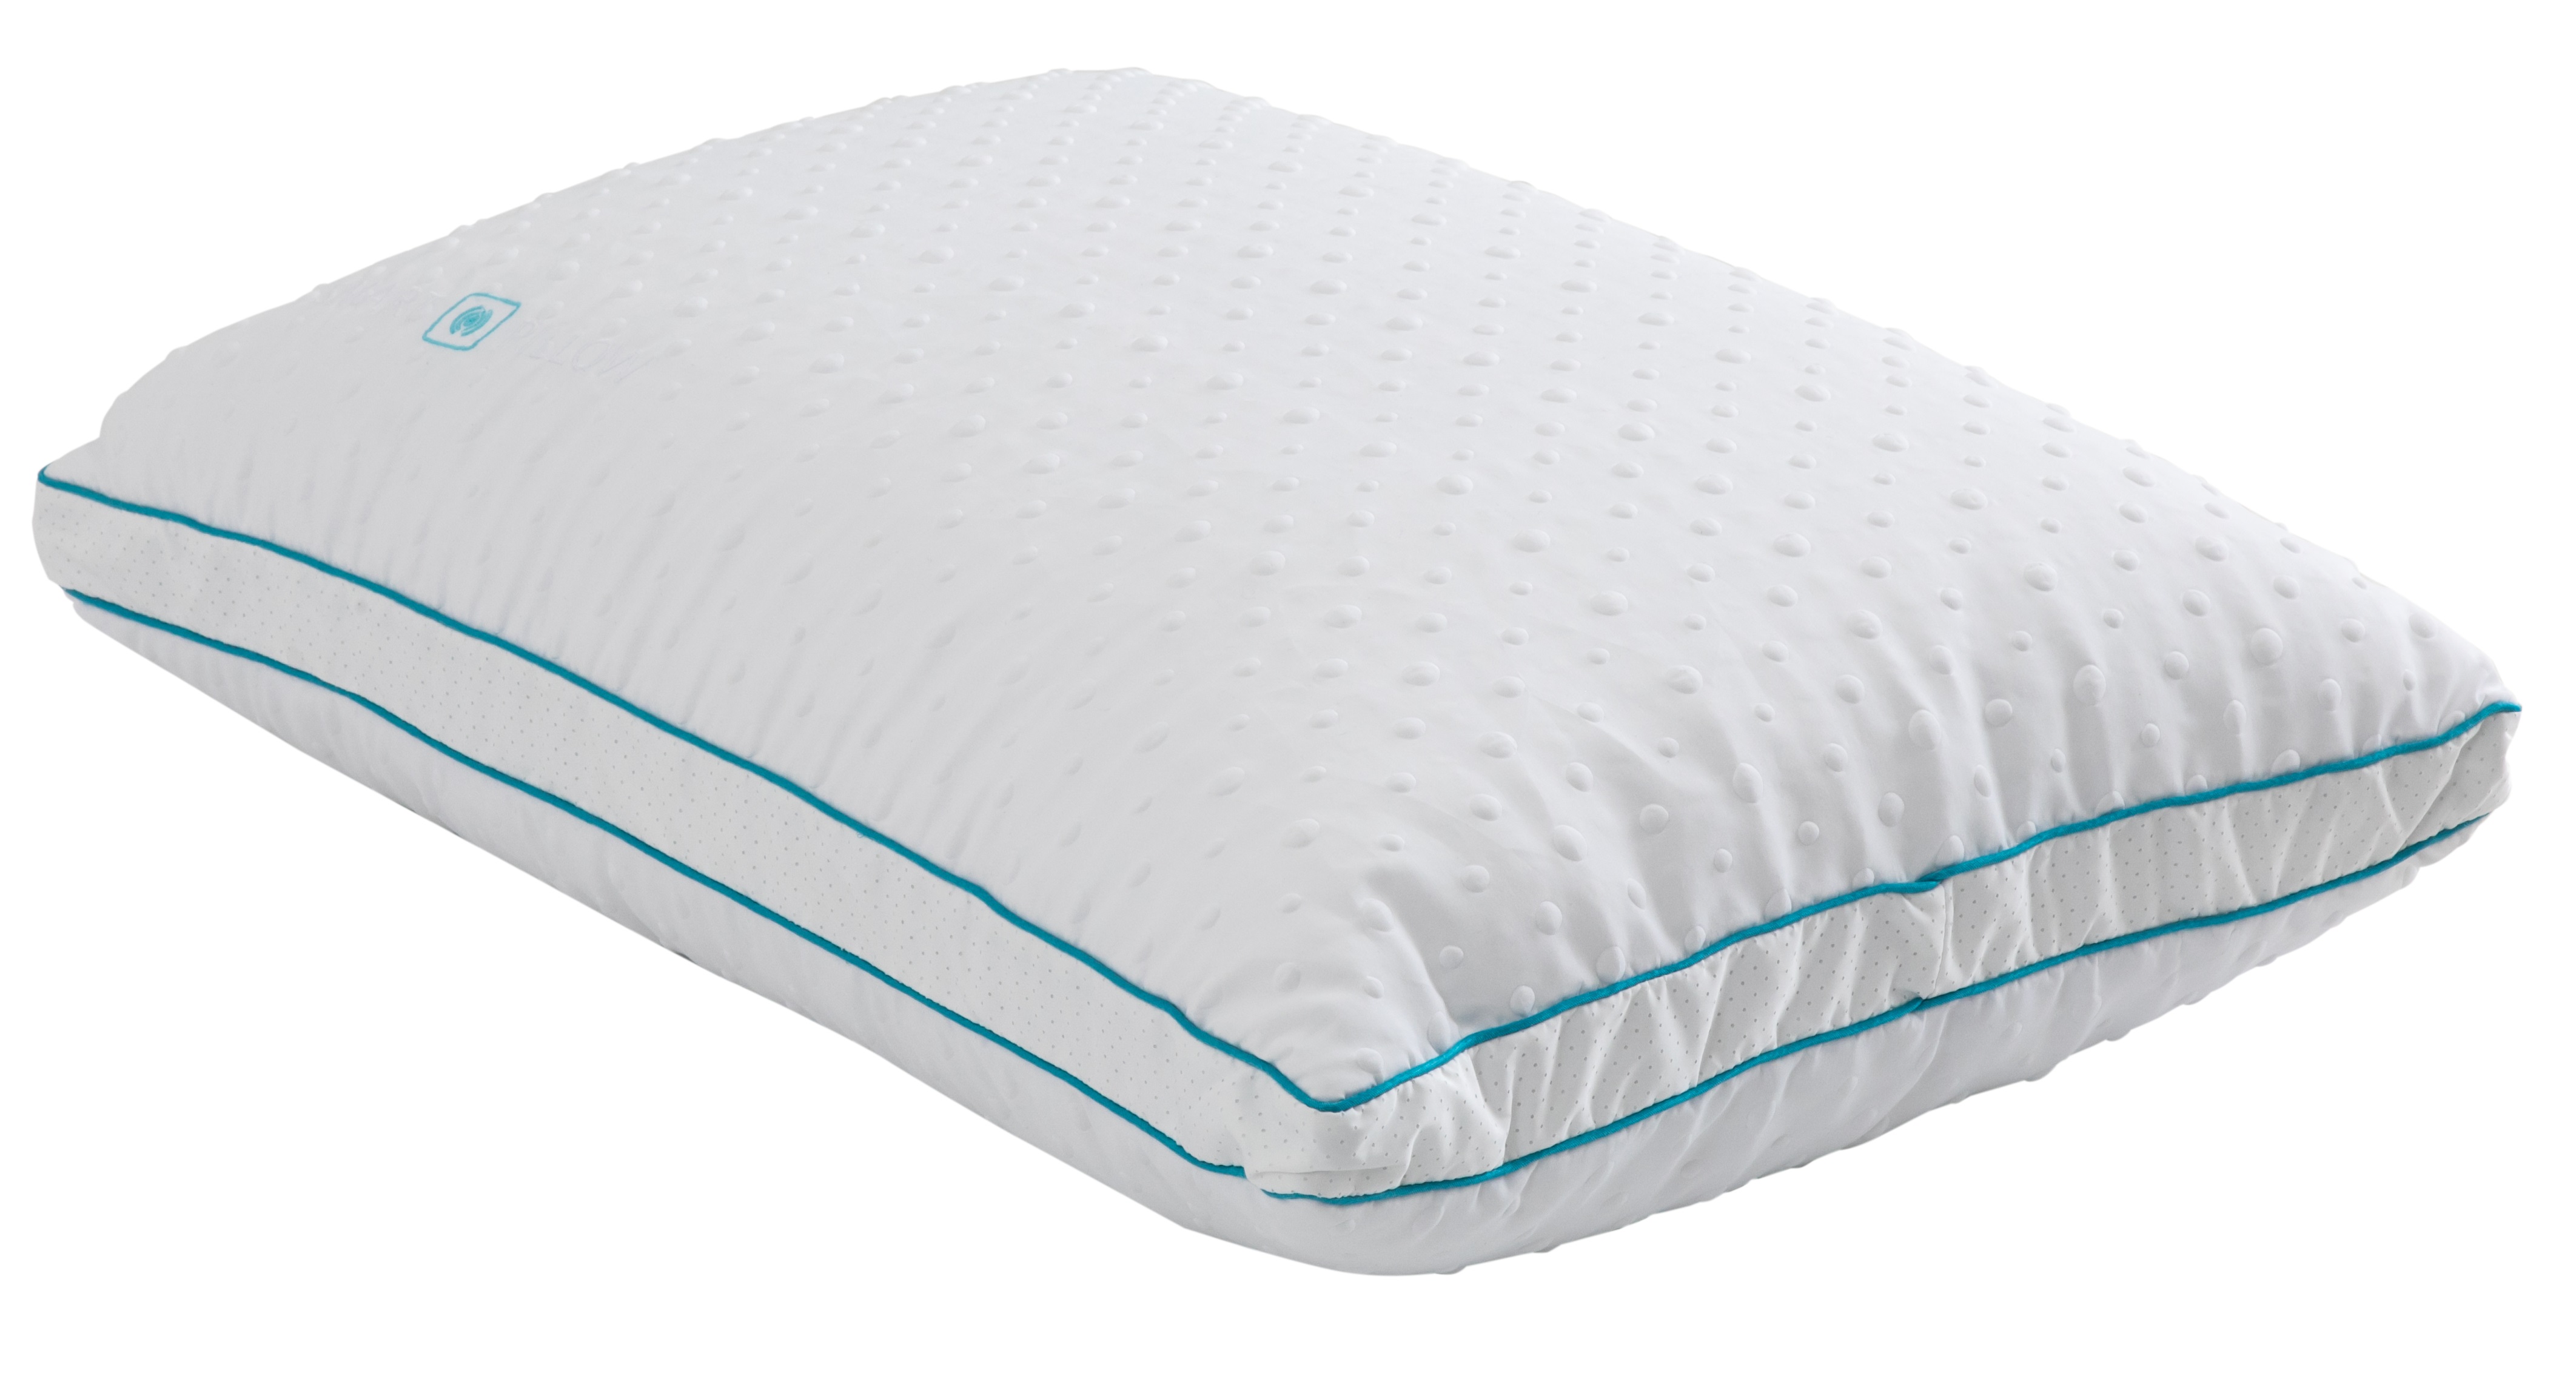    Ascona Smart Pillow